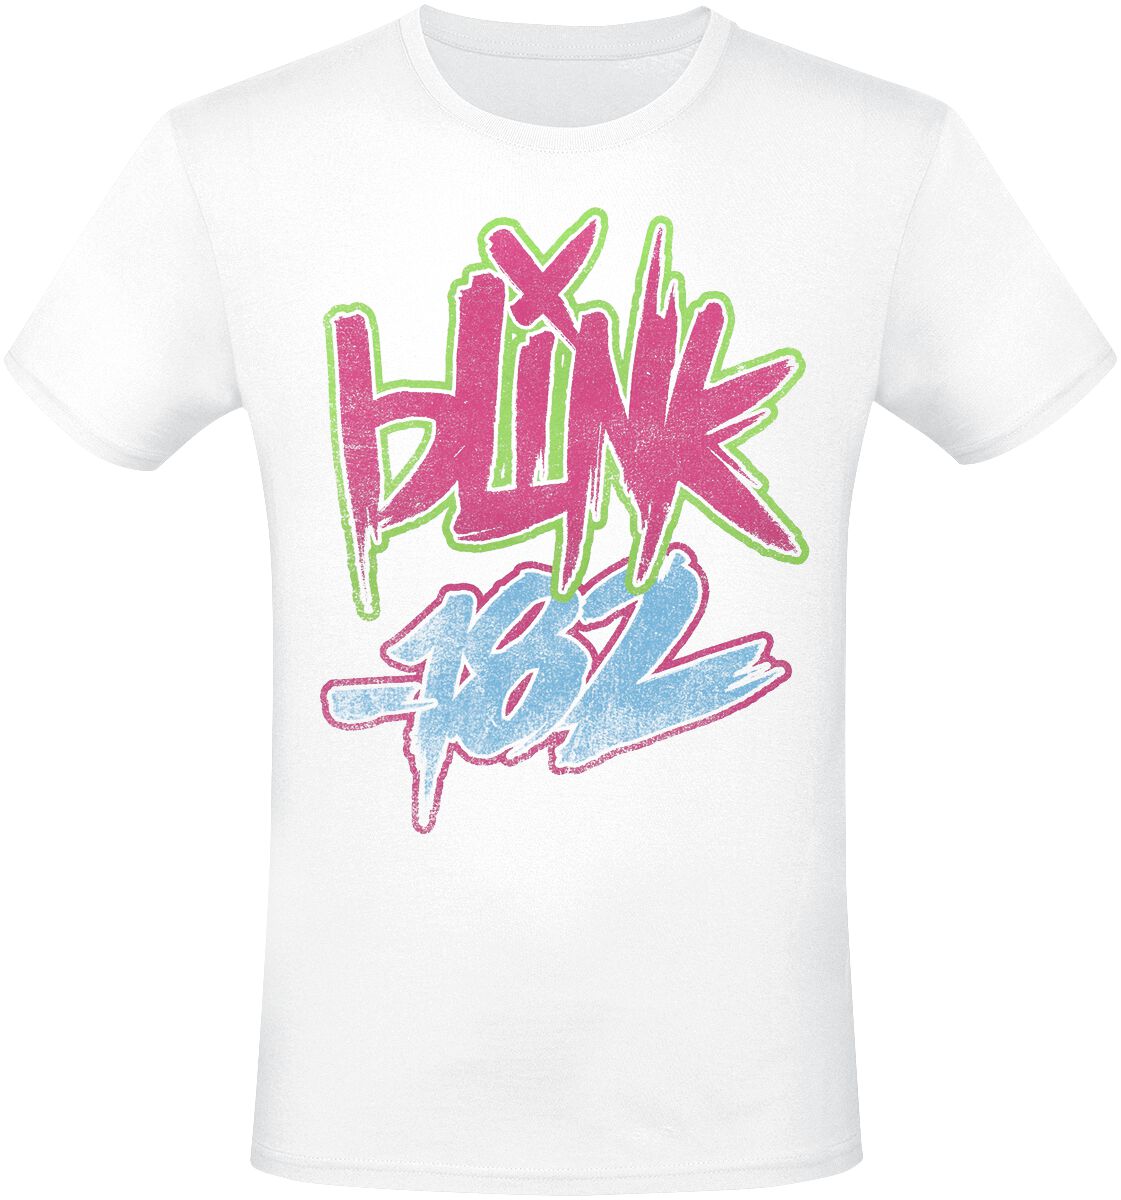 Blink-182 Text T-Shirt weiß in L